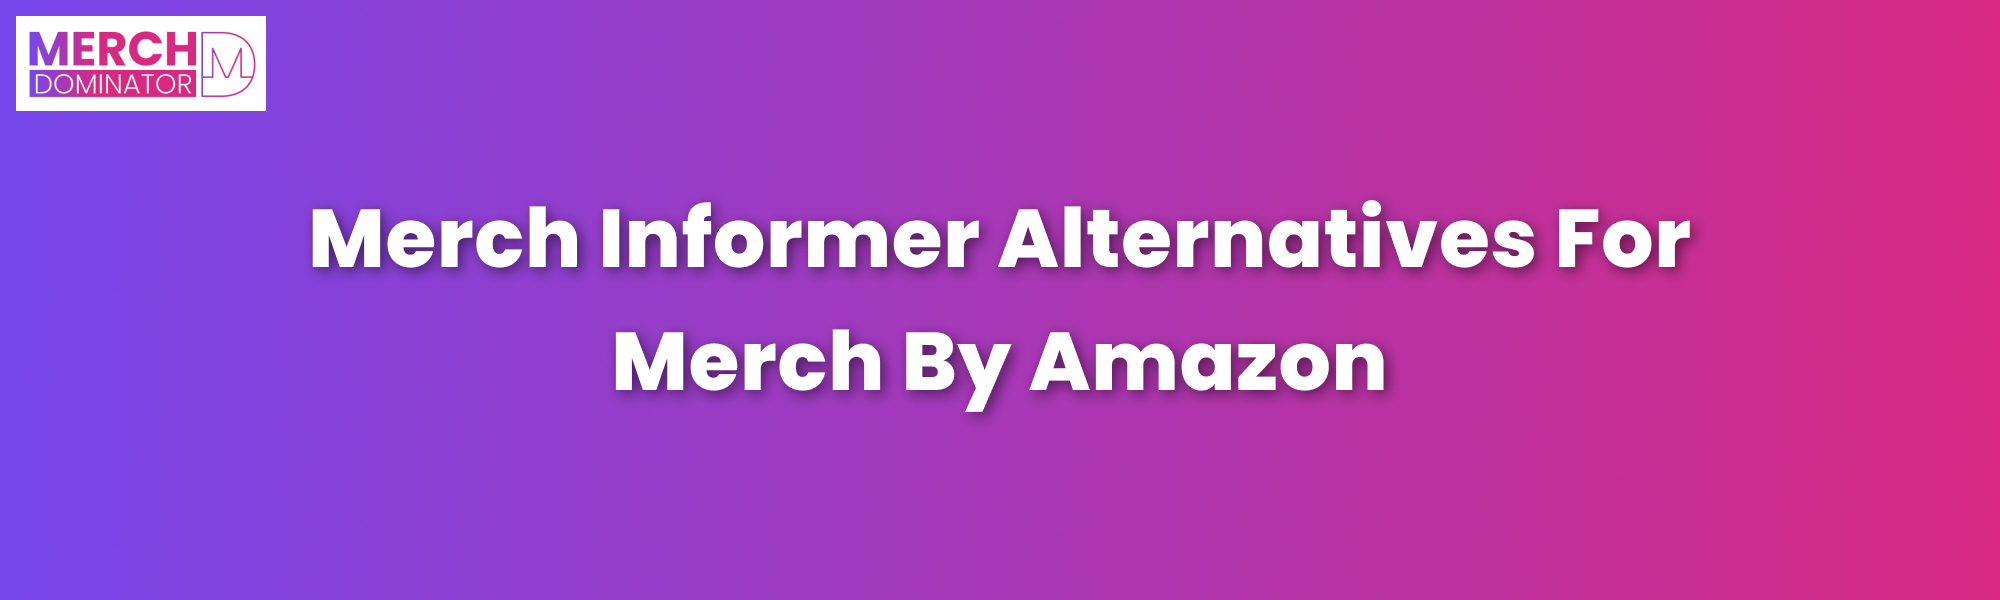 Merch Informer Alternatives For Merch By Amazon